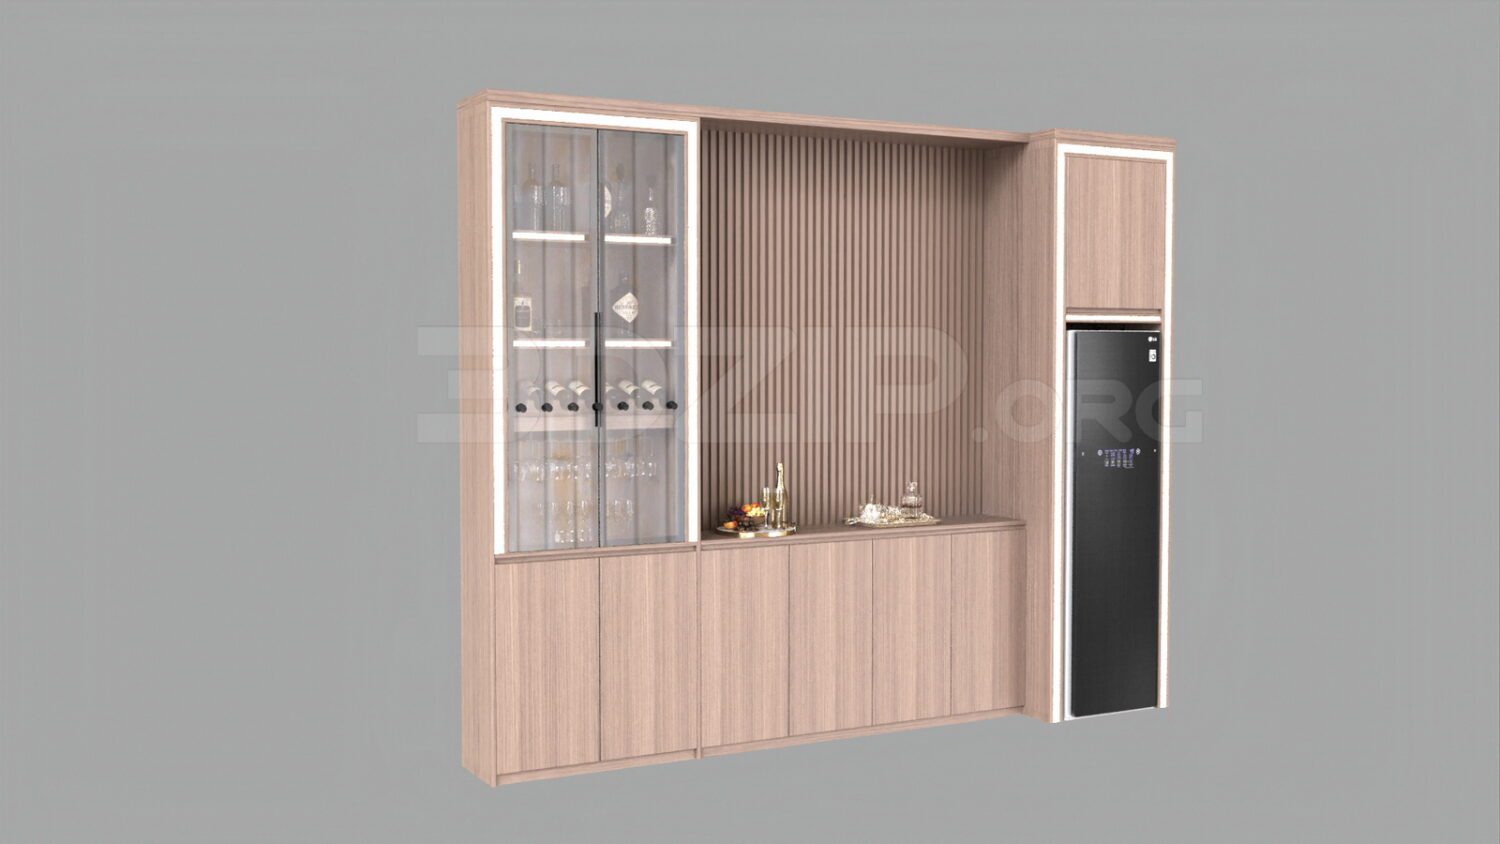 4383. Free 3D Winet Cabinet Model Download